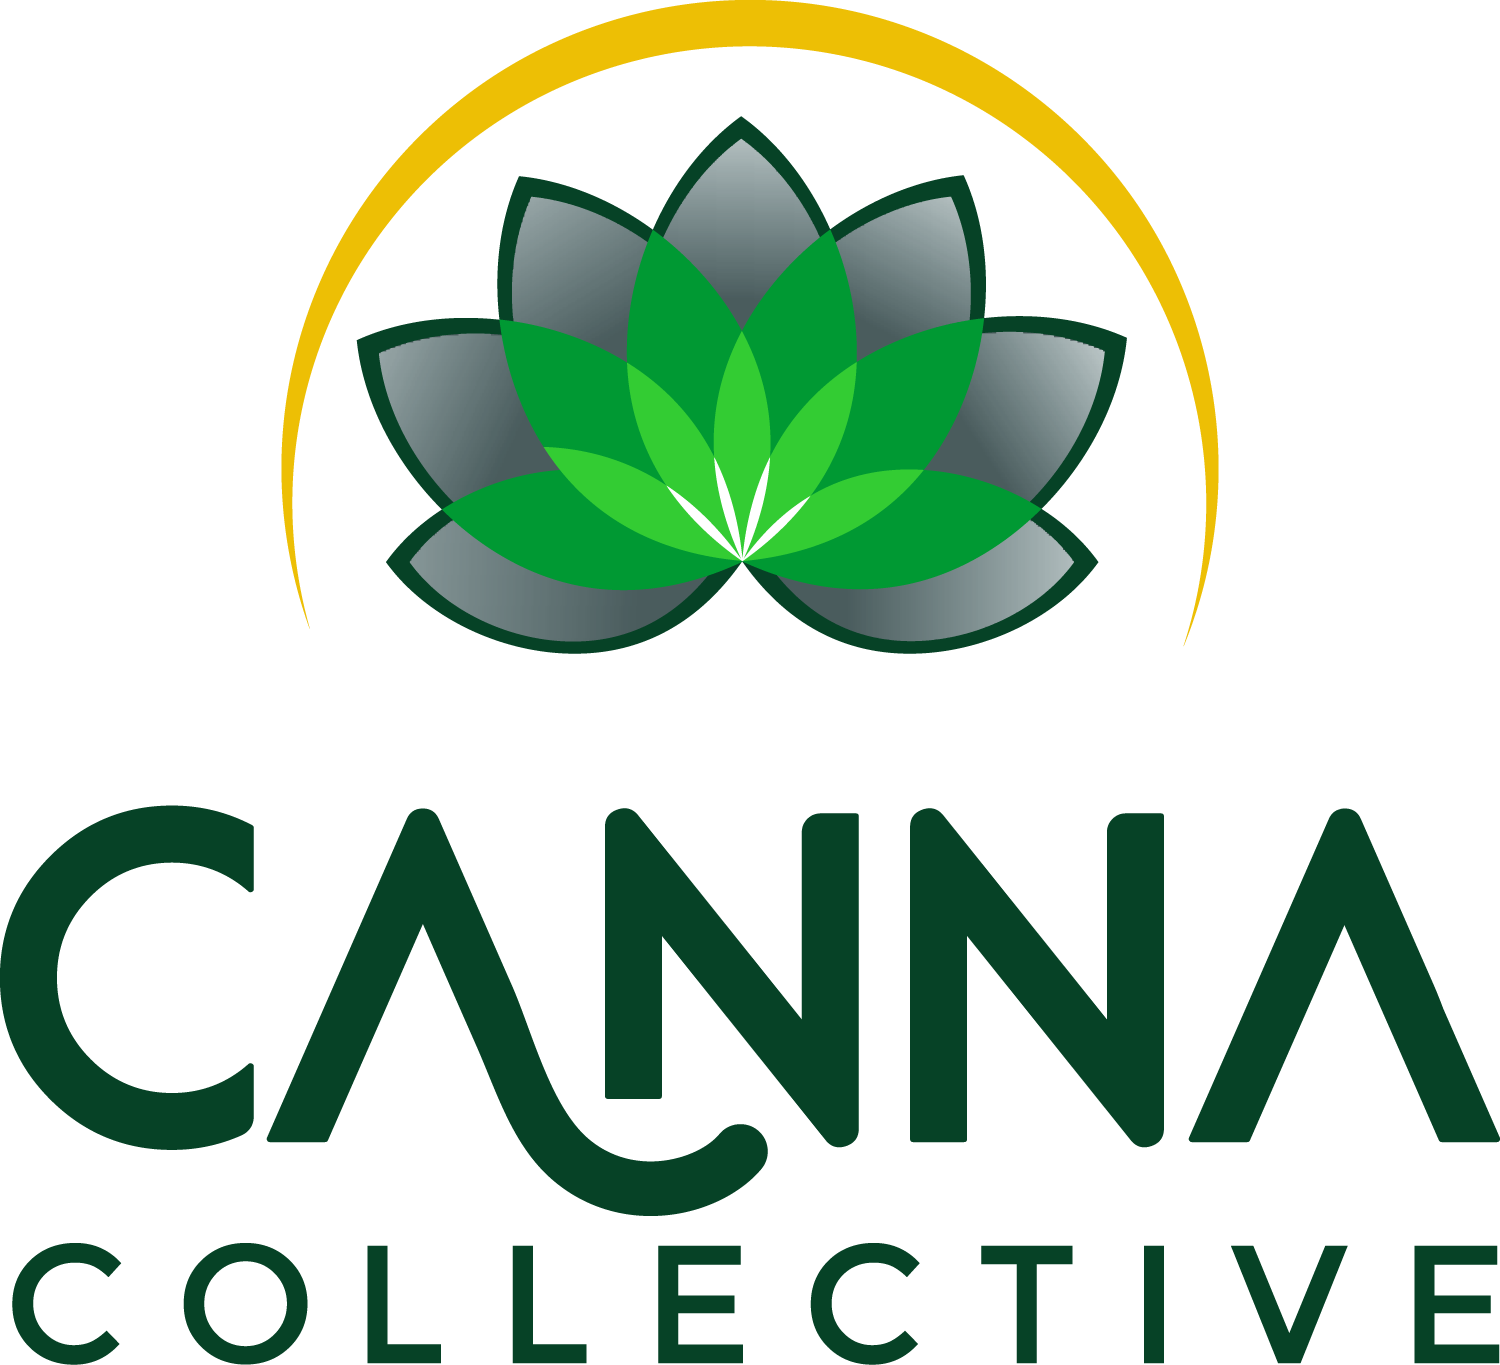 Canna Collective